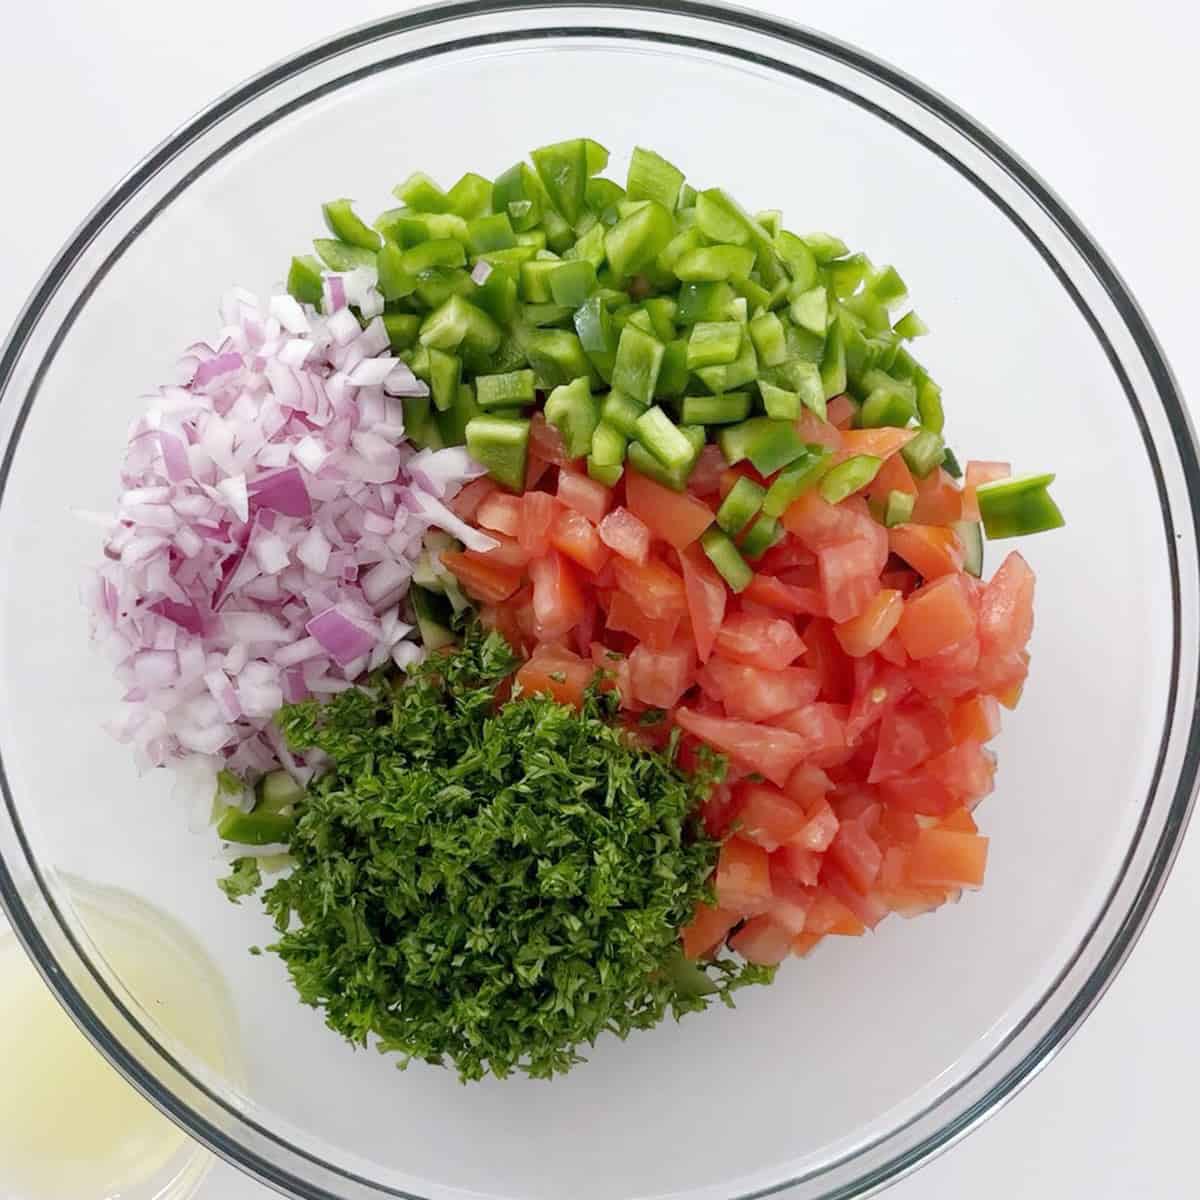 Diced veggies in a bowl.